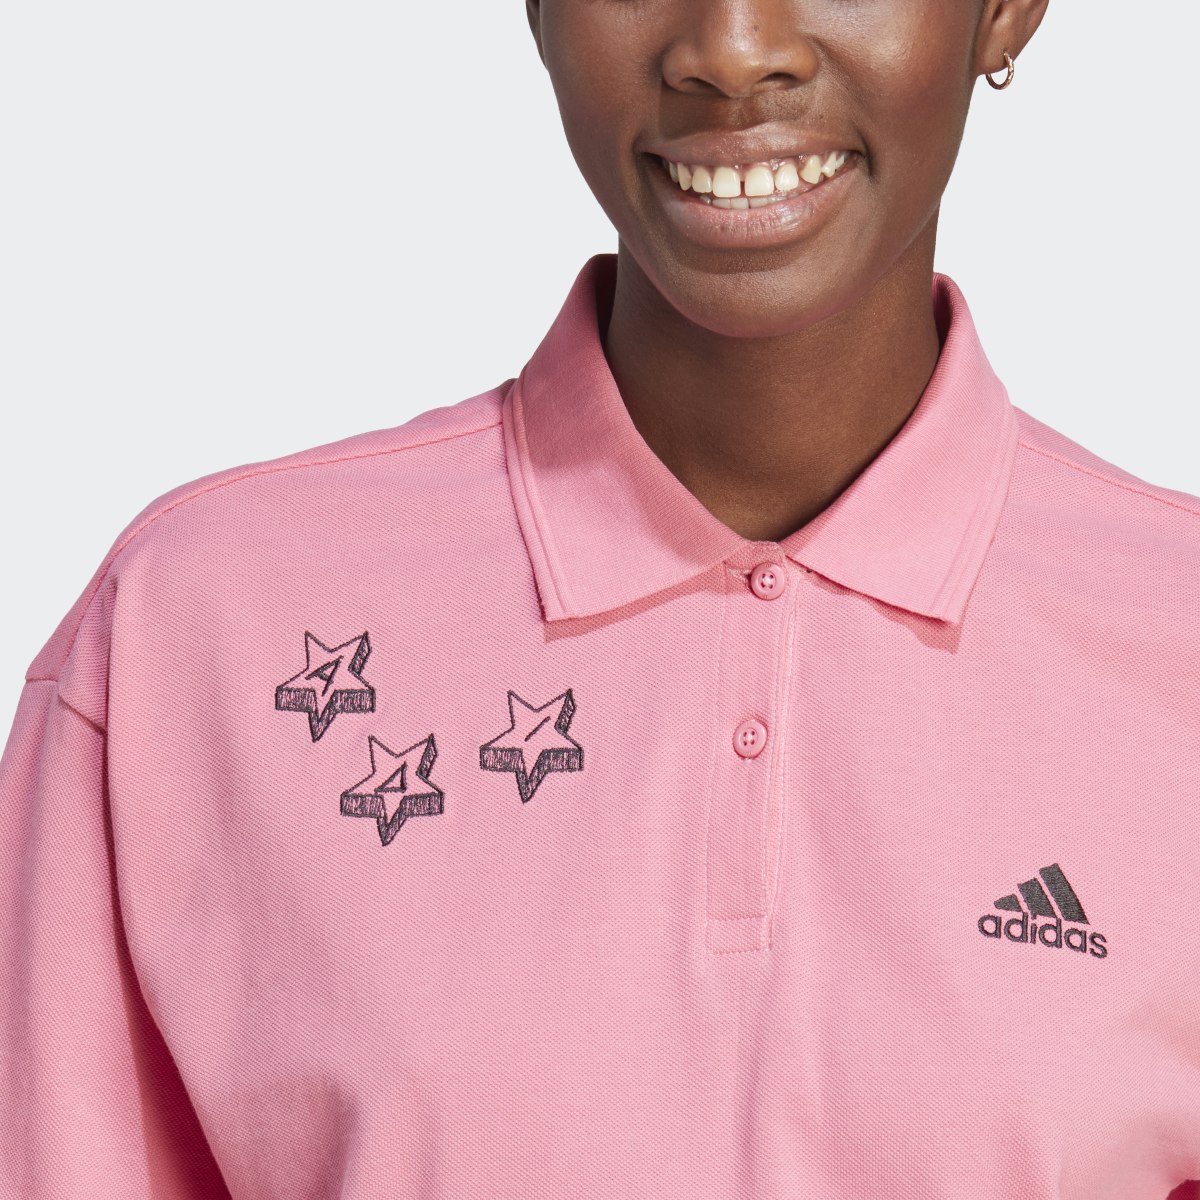 Adidas Scribble Embroidery Polo Shirt. 6